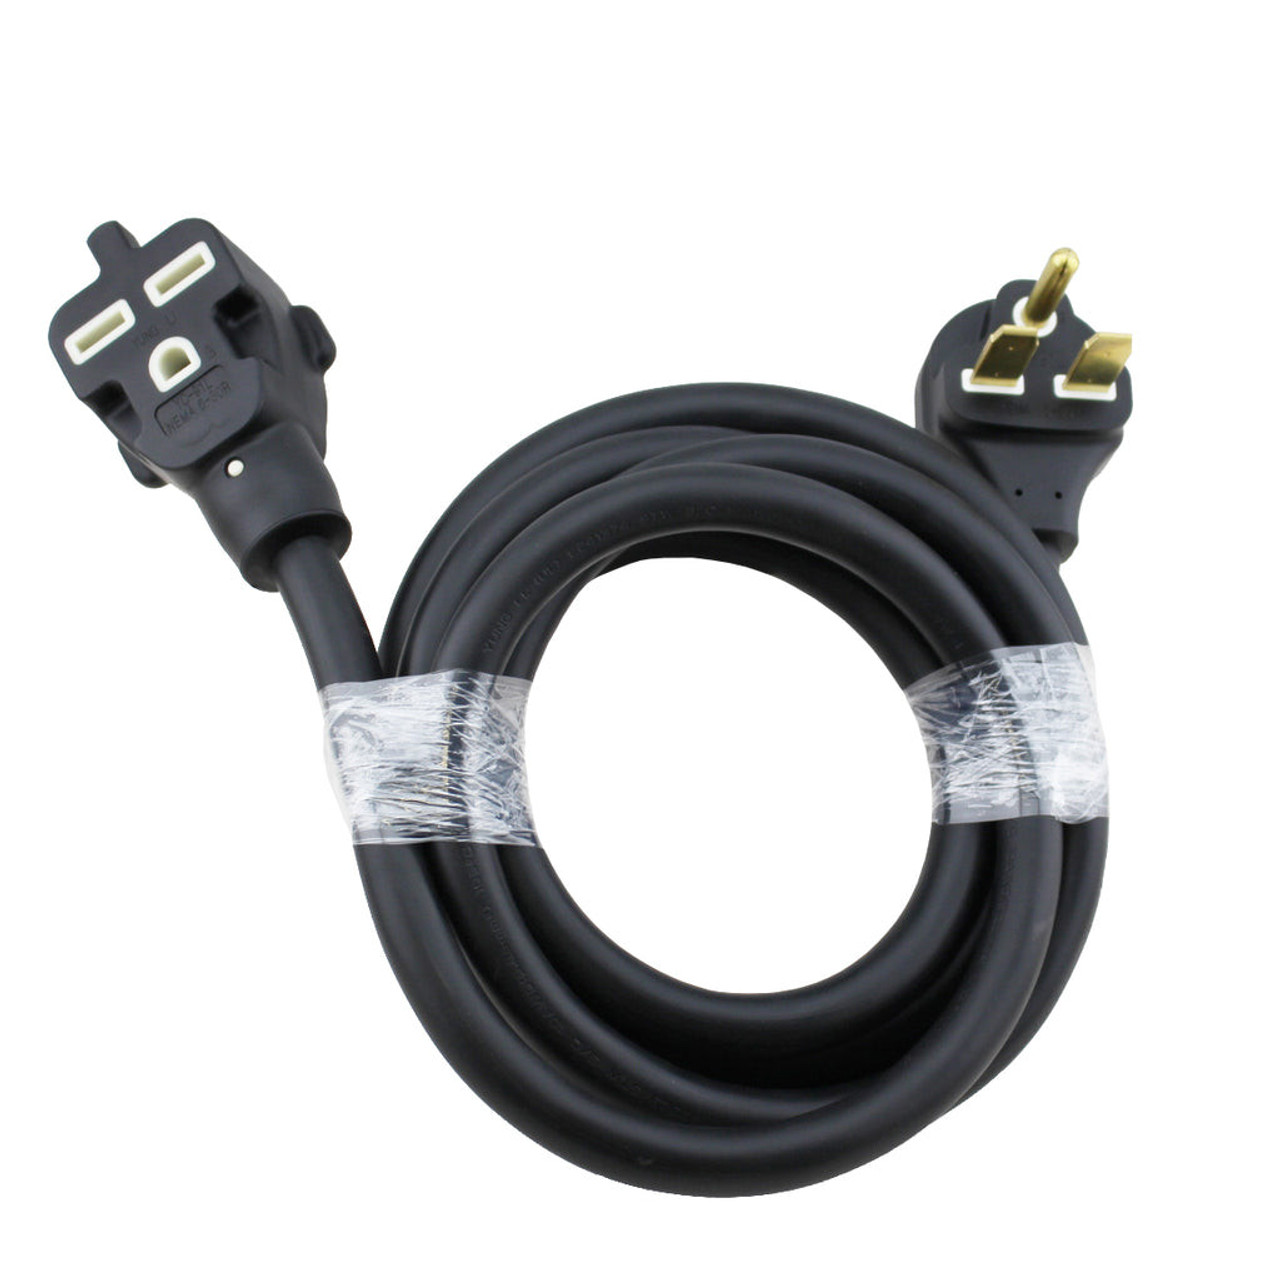 NEMA 6-30 Extension Cord for Level 2 EV Charging (30A, 250V